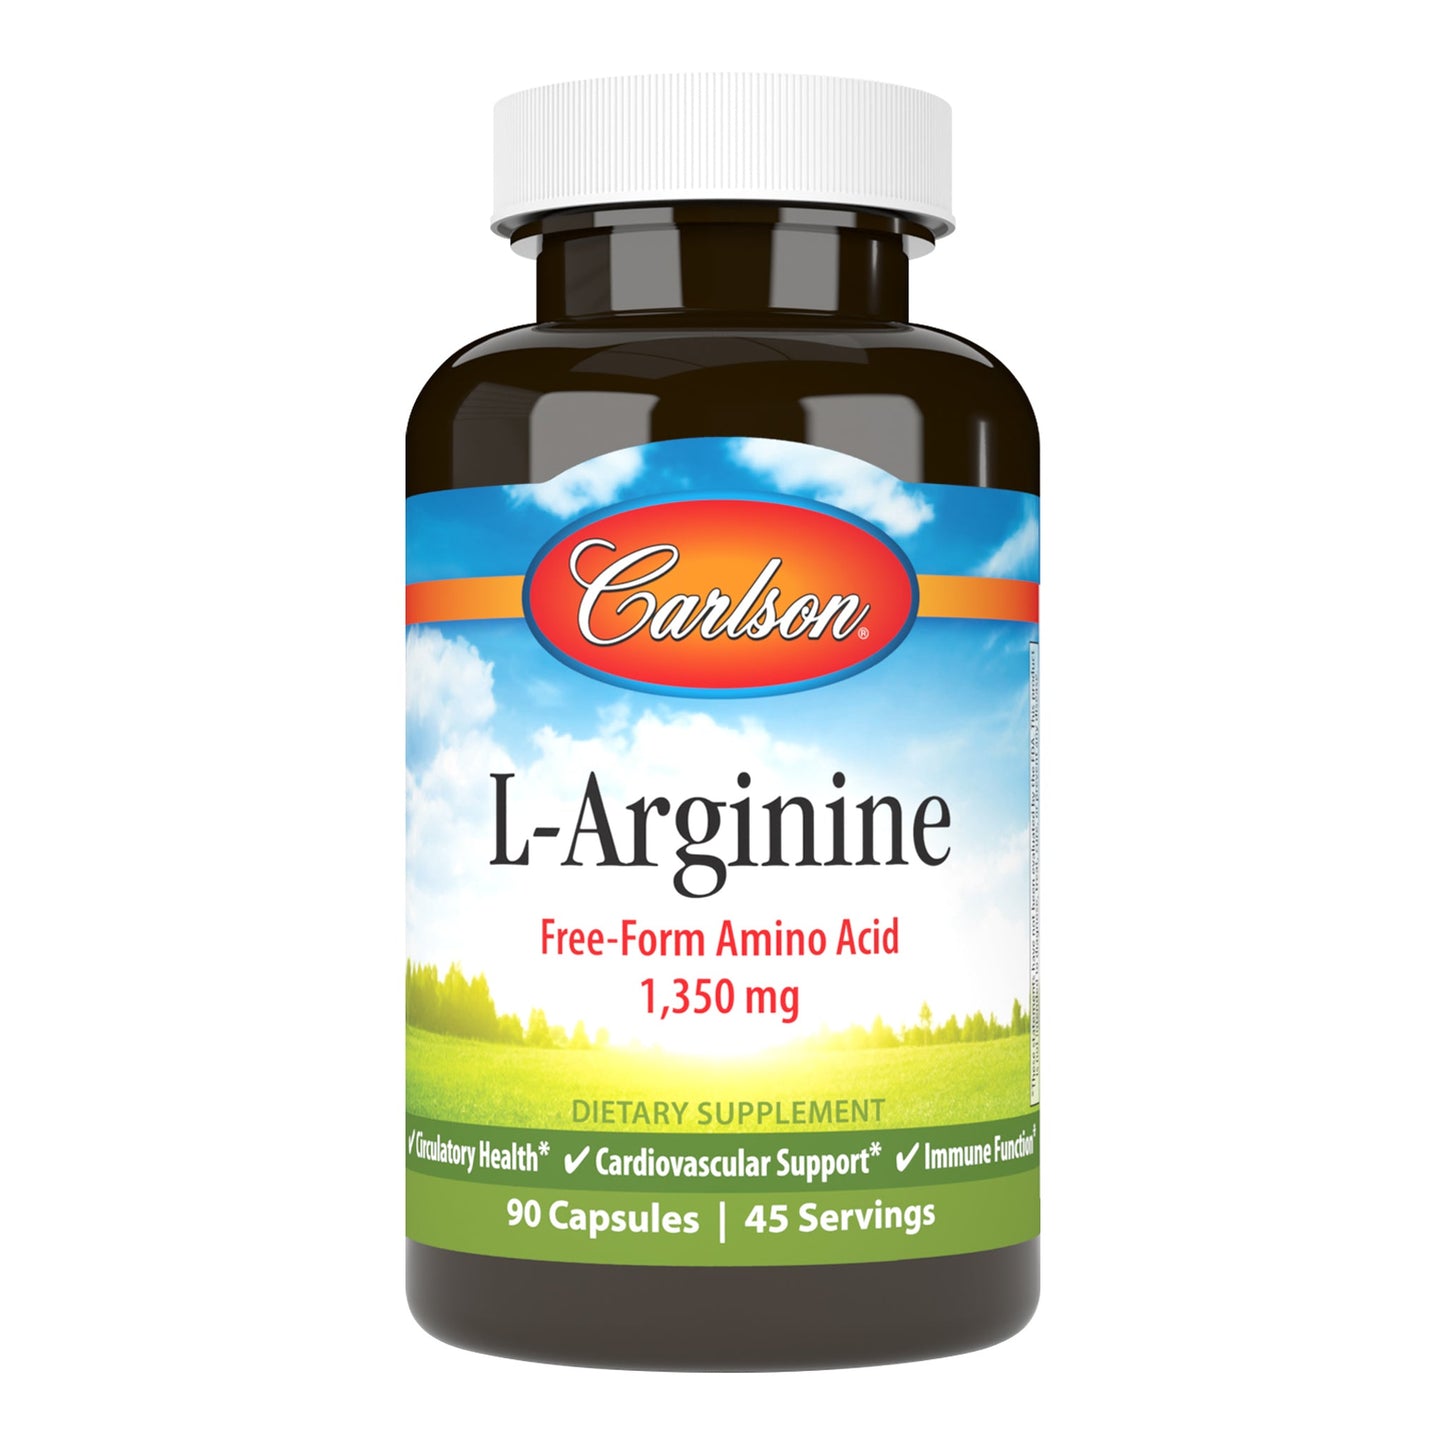 Carlson L-Arginine Free Form Amino Acid 1,350 mg, 90 Capsules